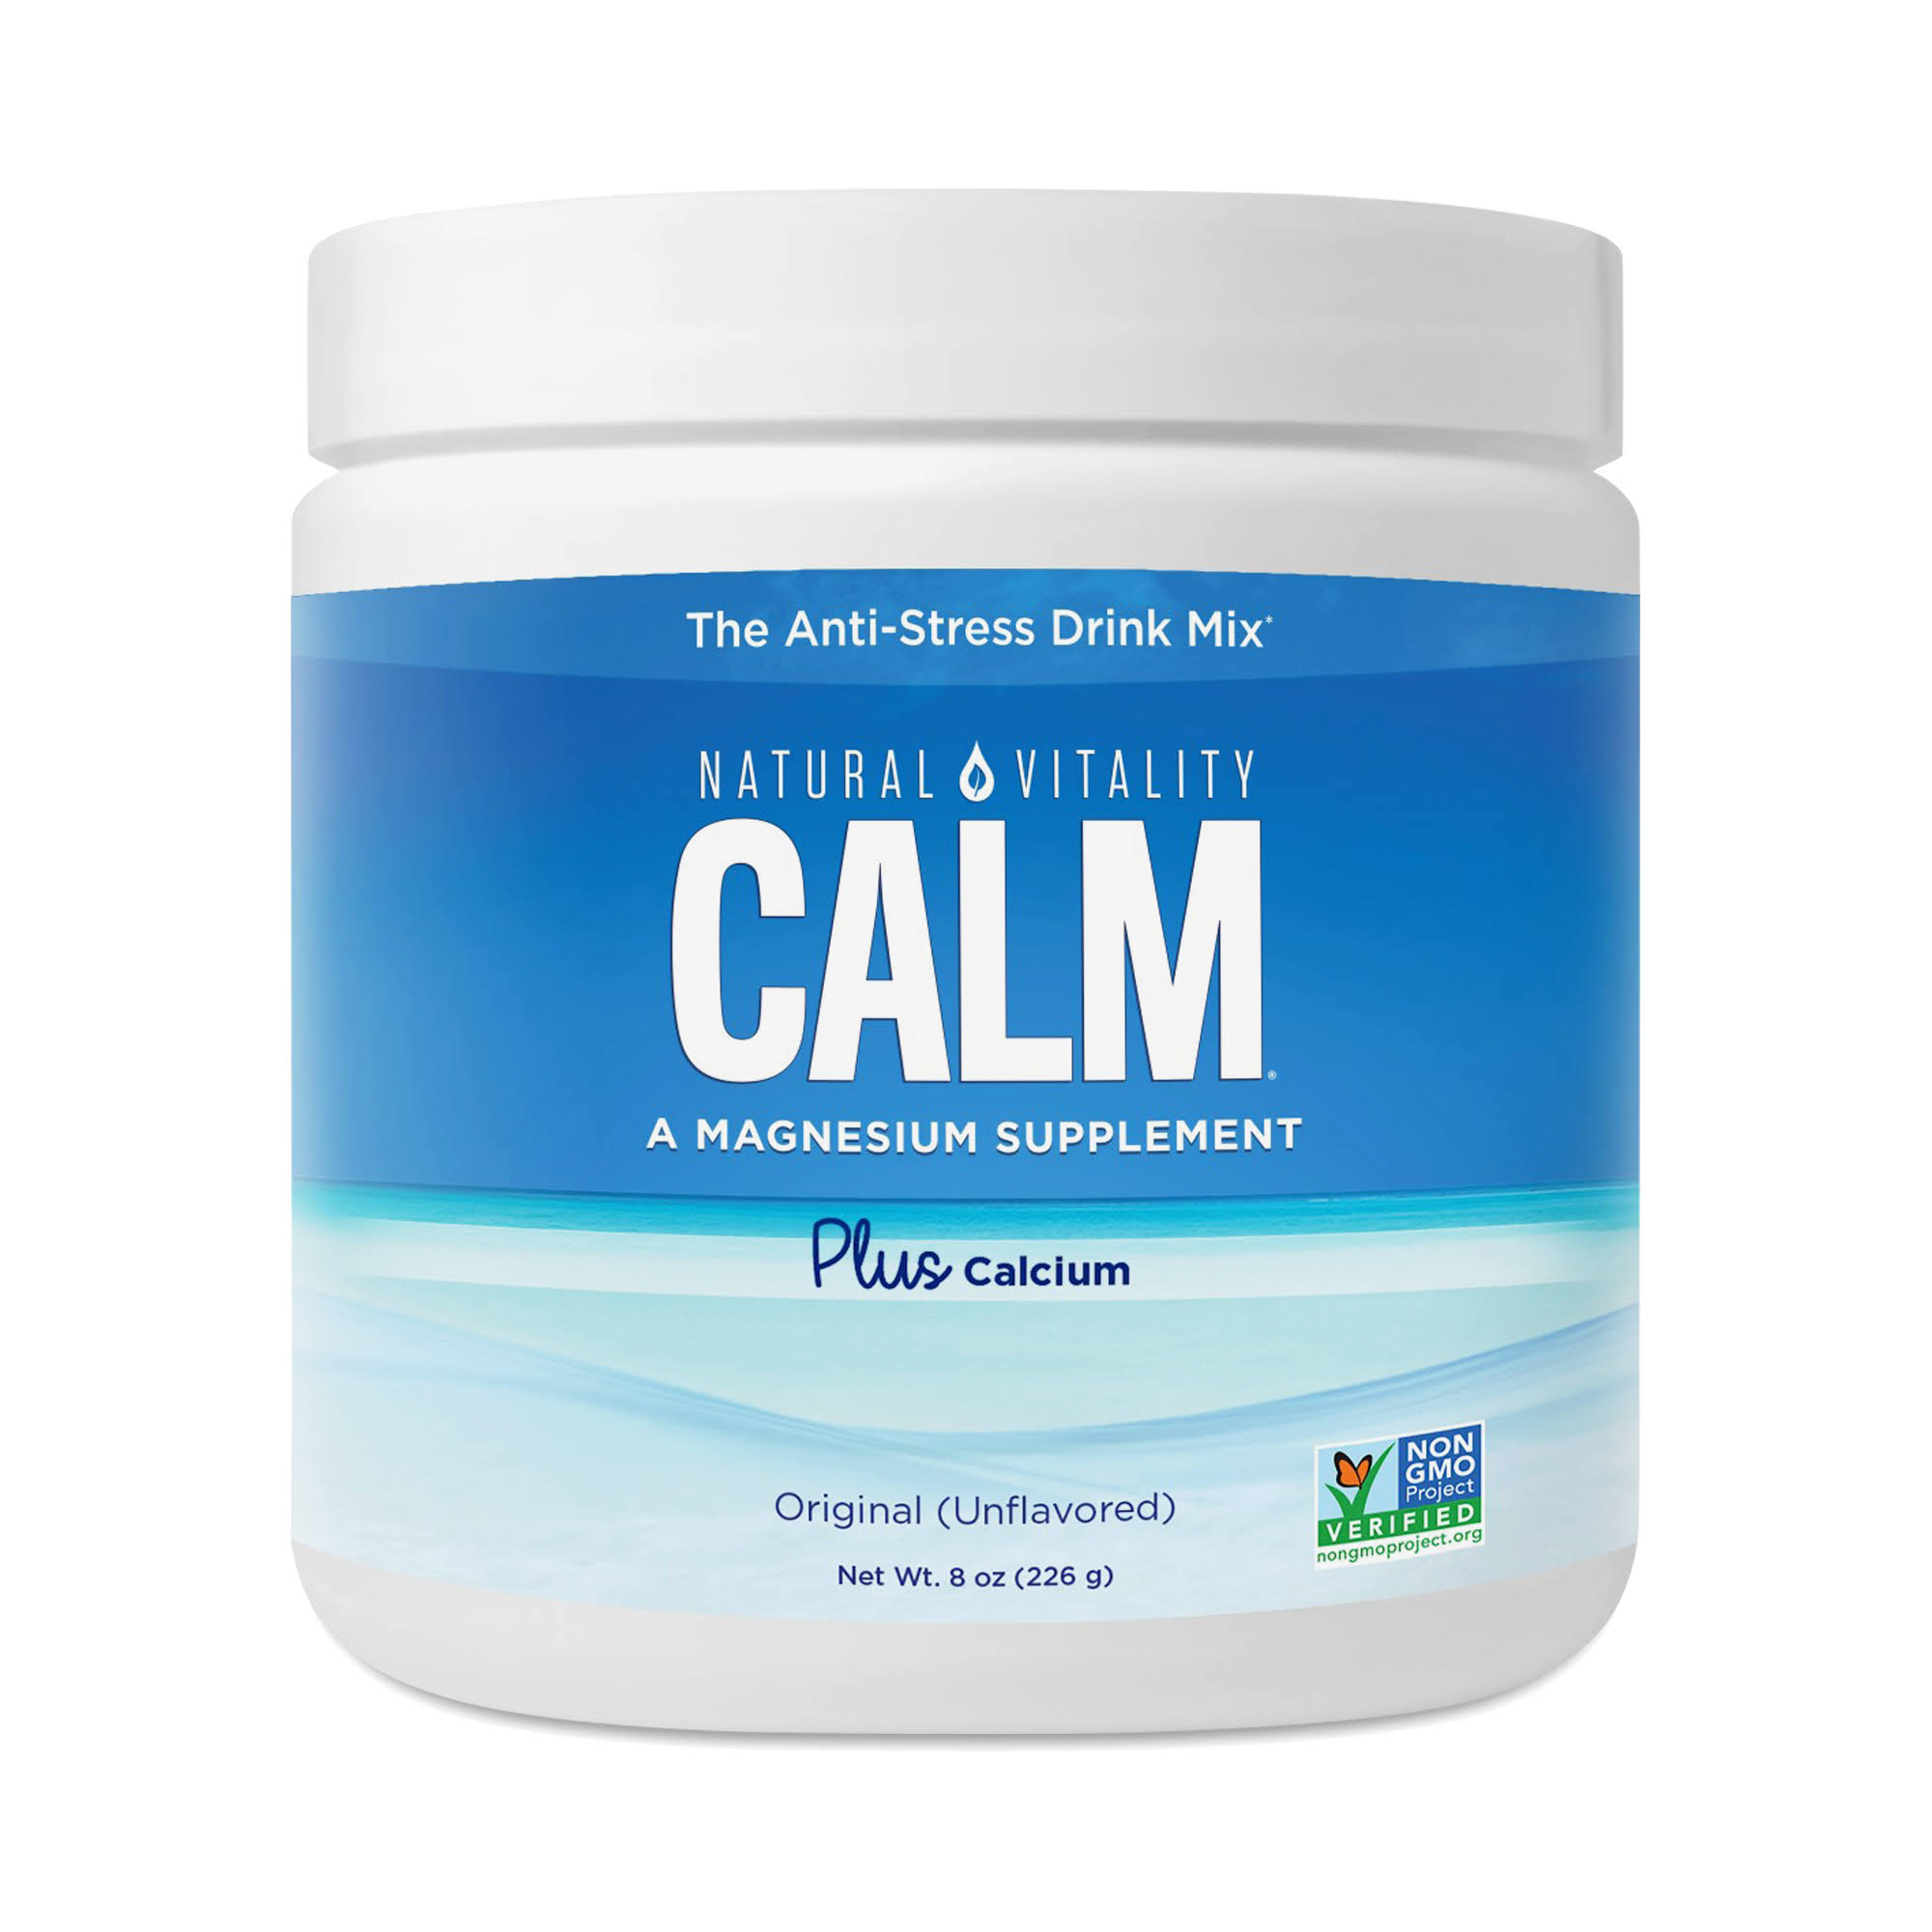 Natural Vitality Calm The Anti-stress Drink Mix Plus Calcium Original (Unflavored) 8 oz (226 g)